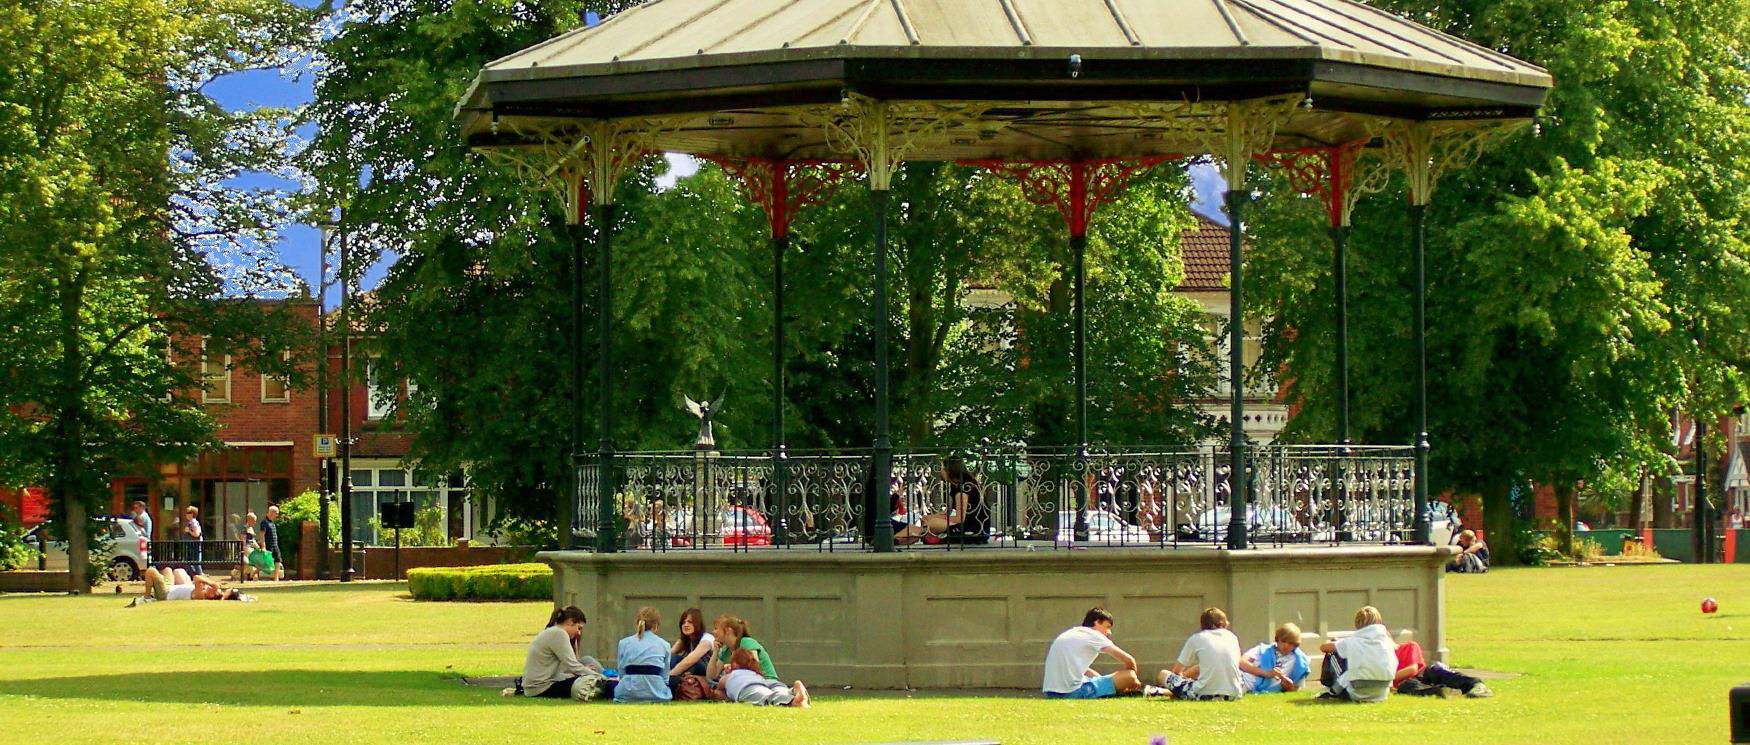 Eastleigh bandstand